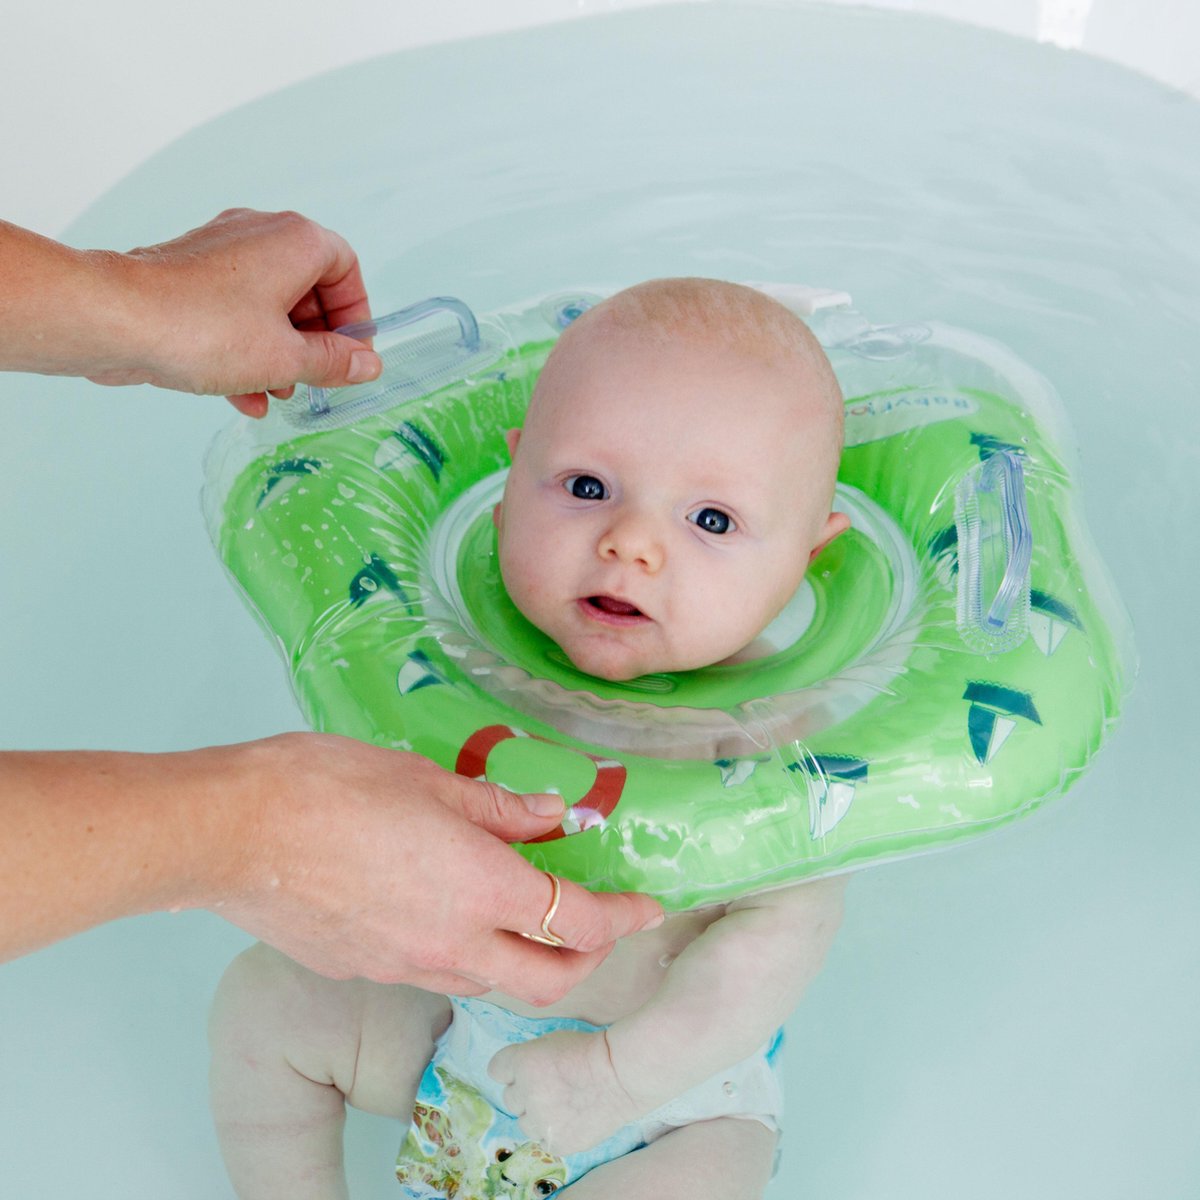 Herenhuis Gehakt Herinnering BabyFloat ® - CE Goedgekeurde Zwemband Baby Nek - Baby Swimmer - Groen |  bol.com